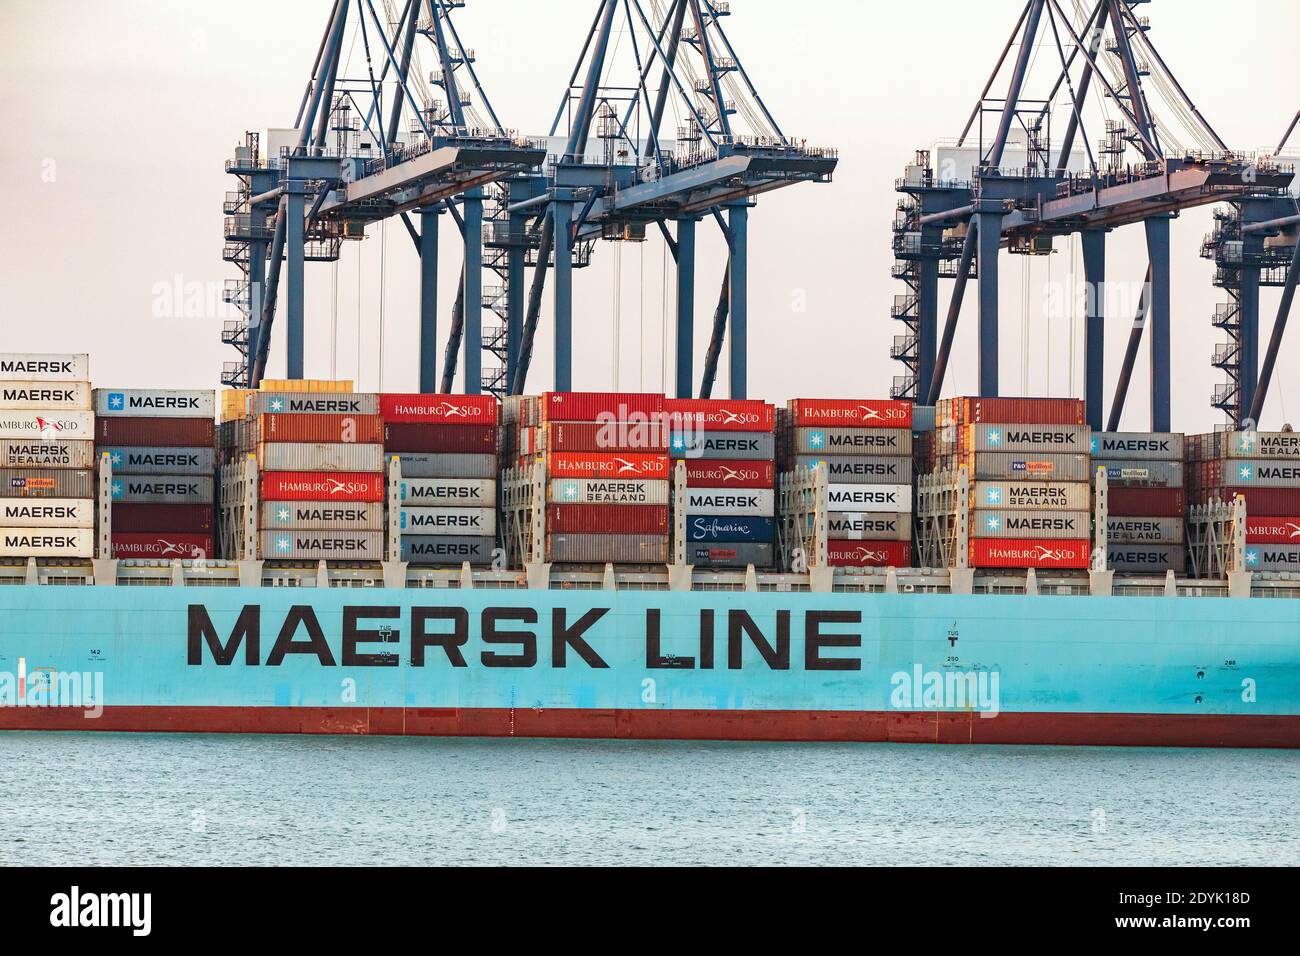 Maersk ship docked at Port of Felixstowe, Suffolk, UK Stock Photo